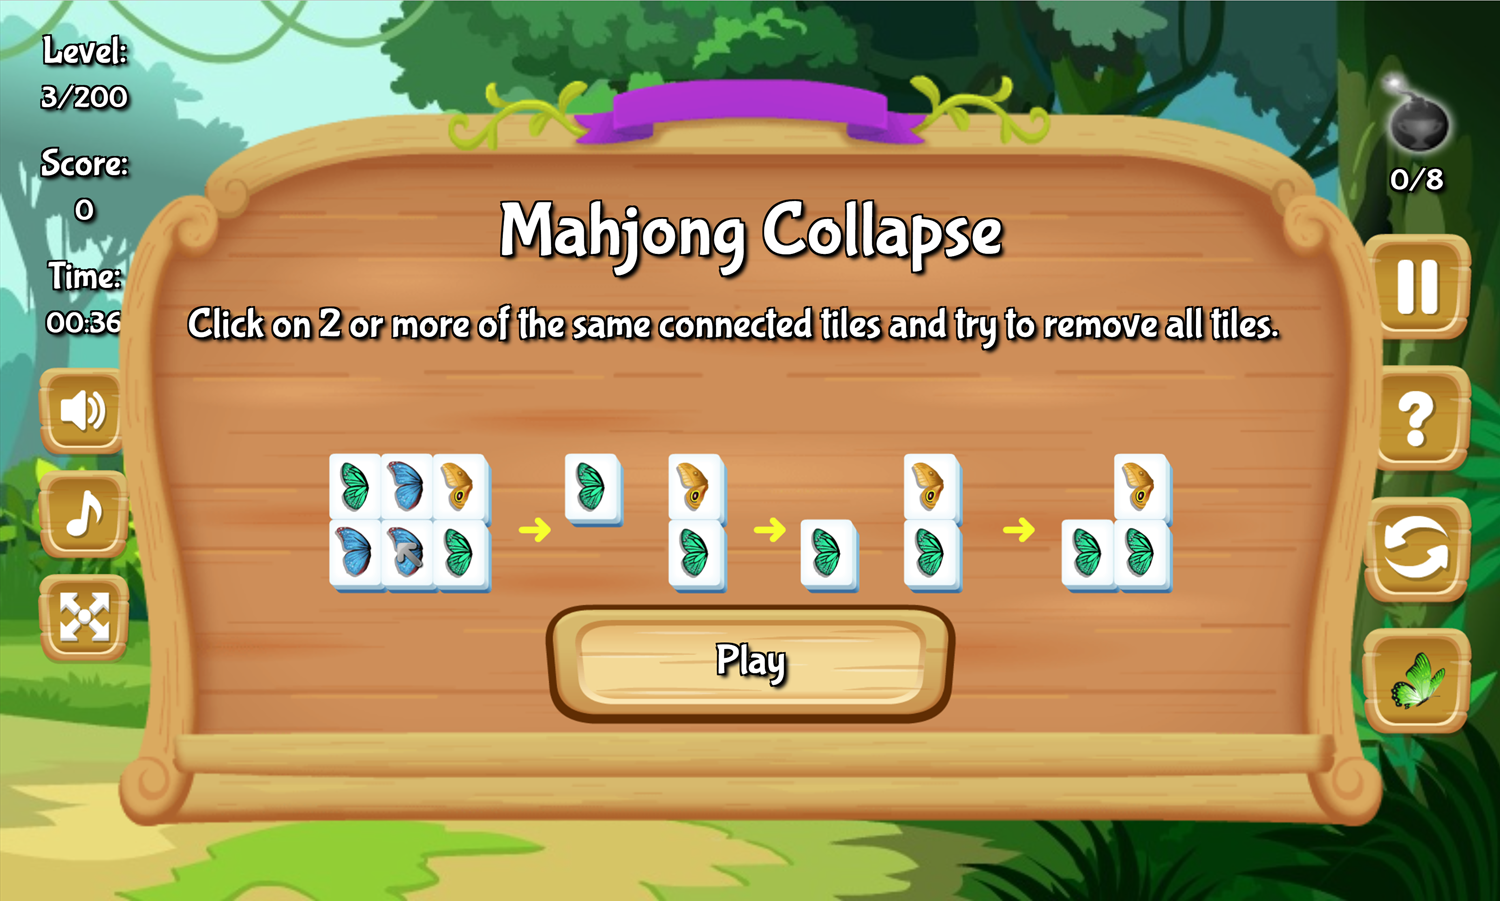 Mahjong Butterfly Garden Game Mahjong Collapse How to Play Screen Screenshot.